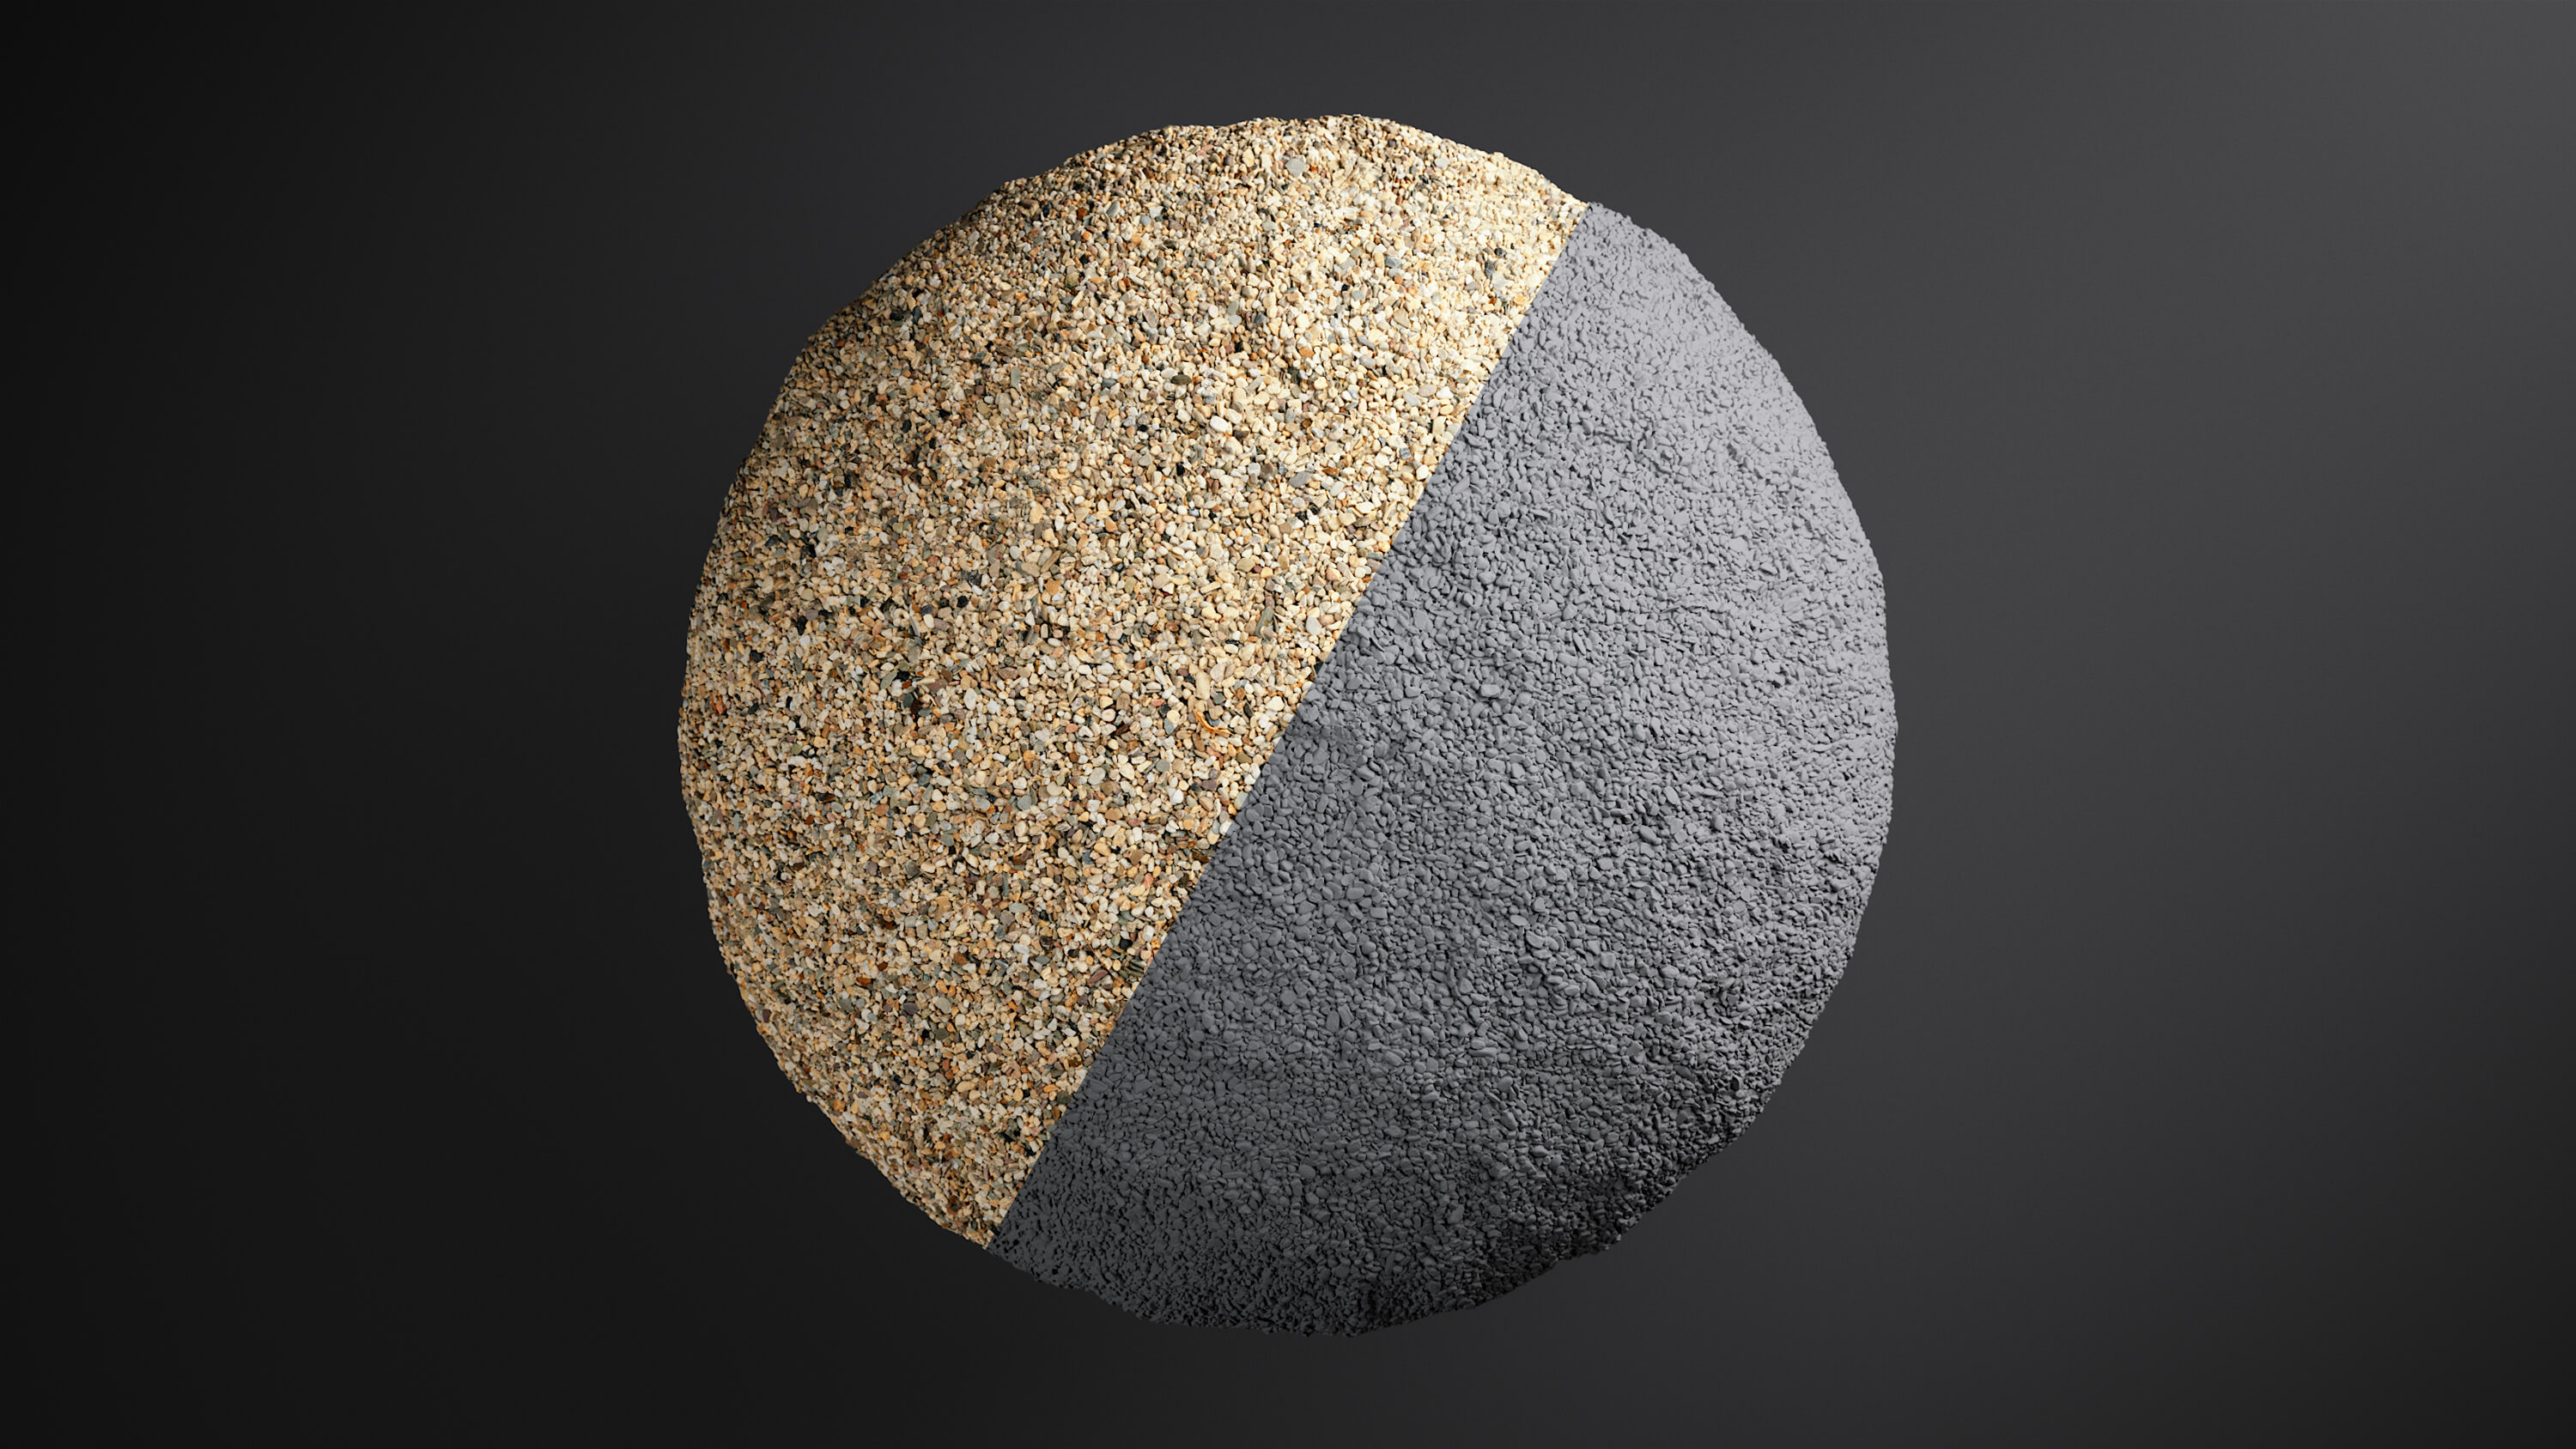 high resolution seamless pebble floor ground texture